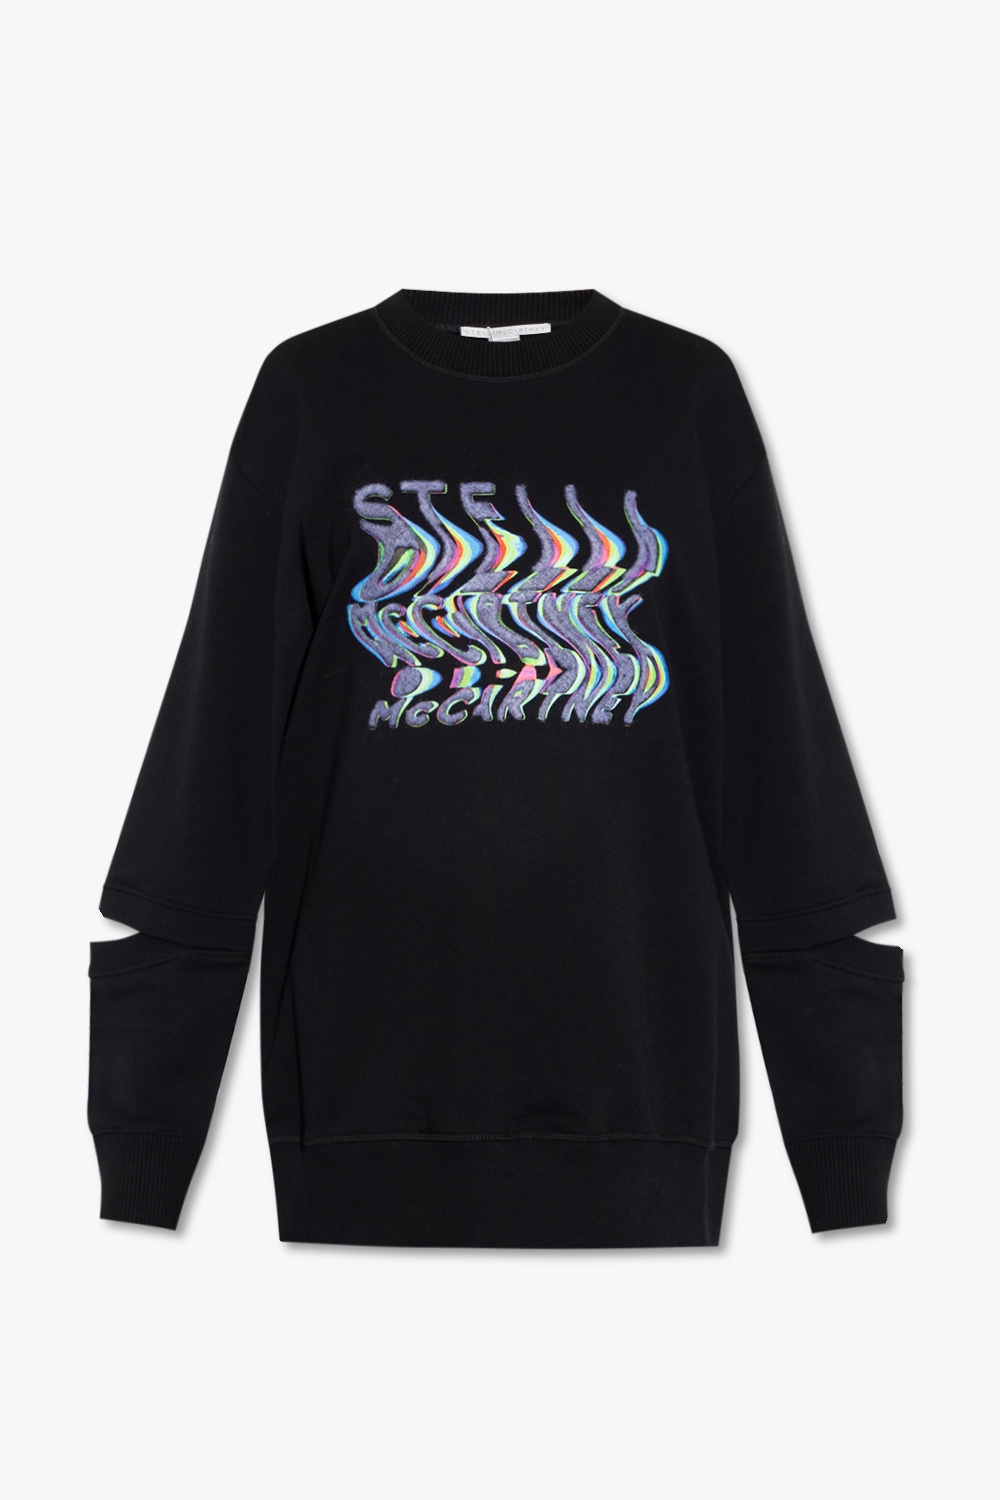 Stella McCartney Printed sweatshirt